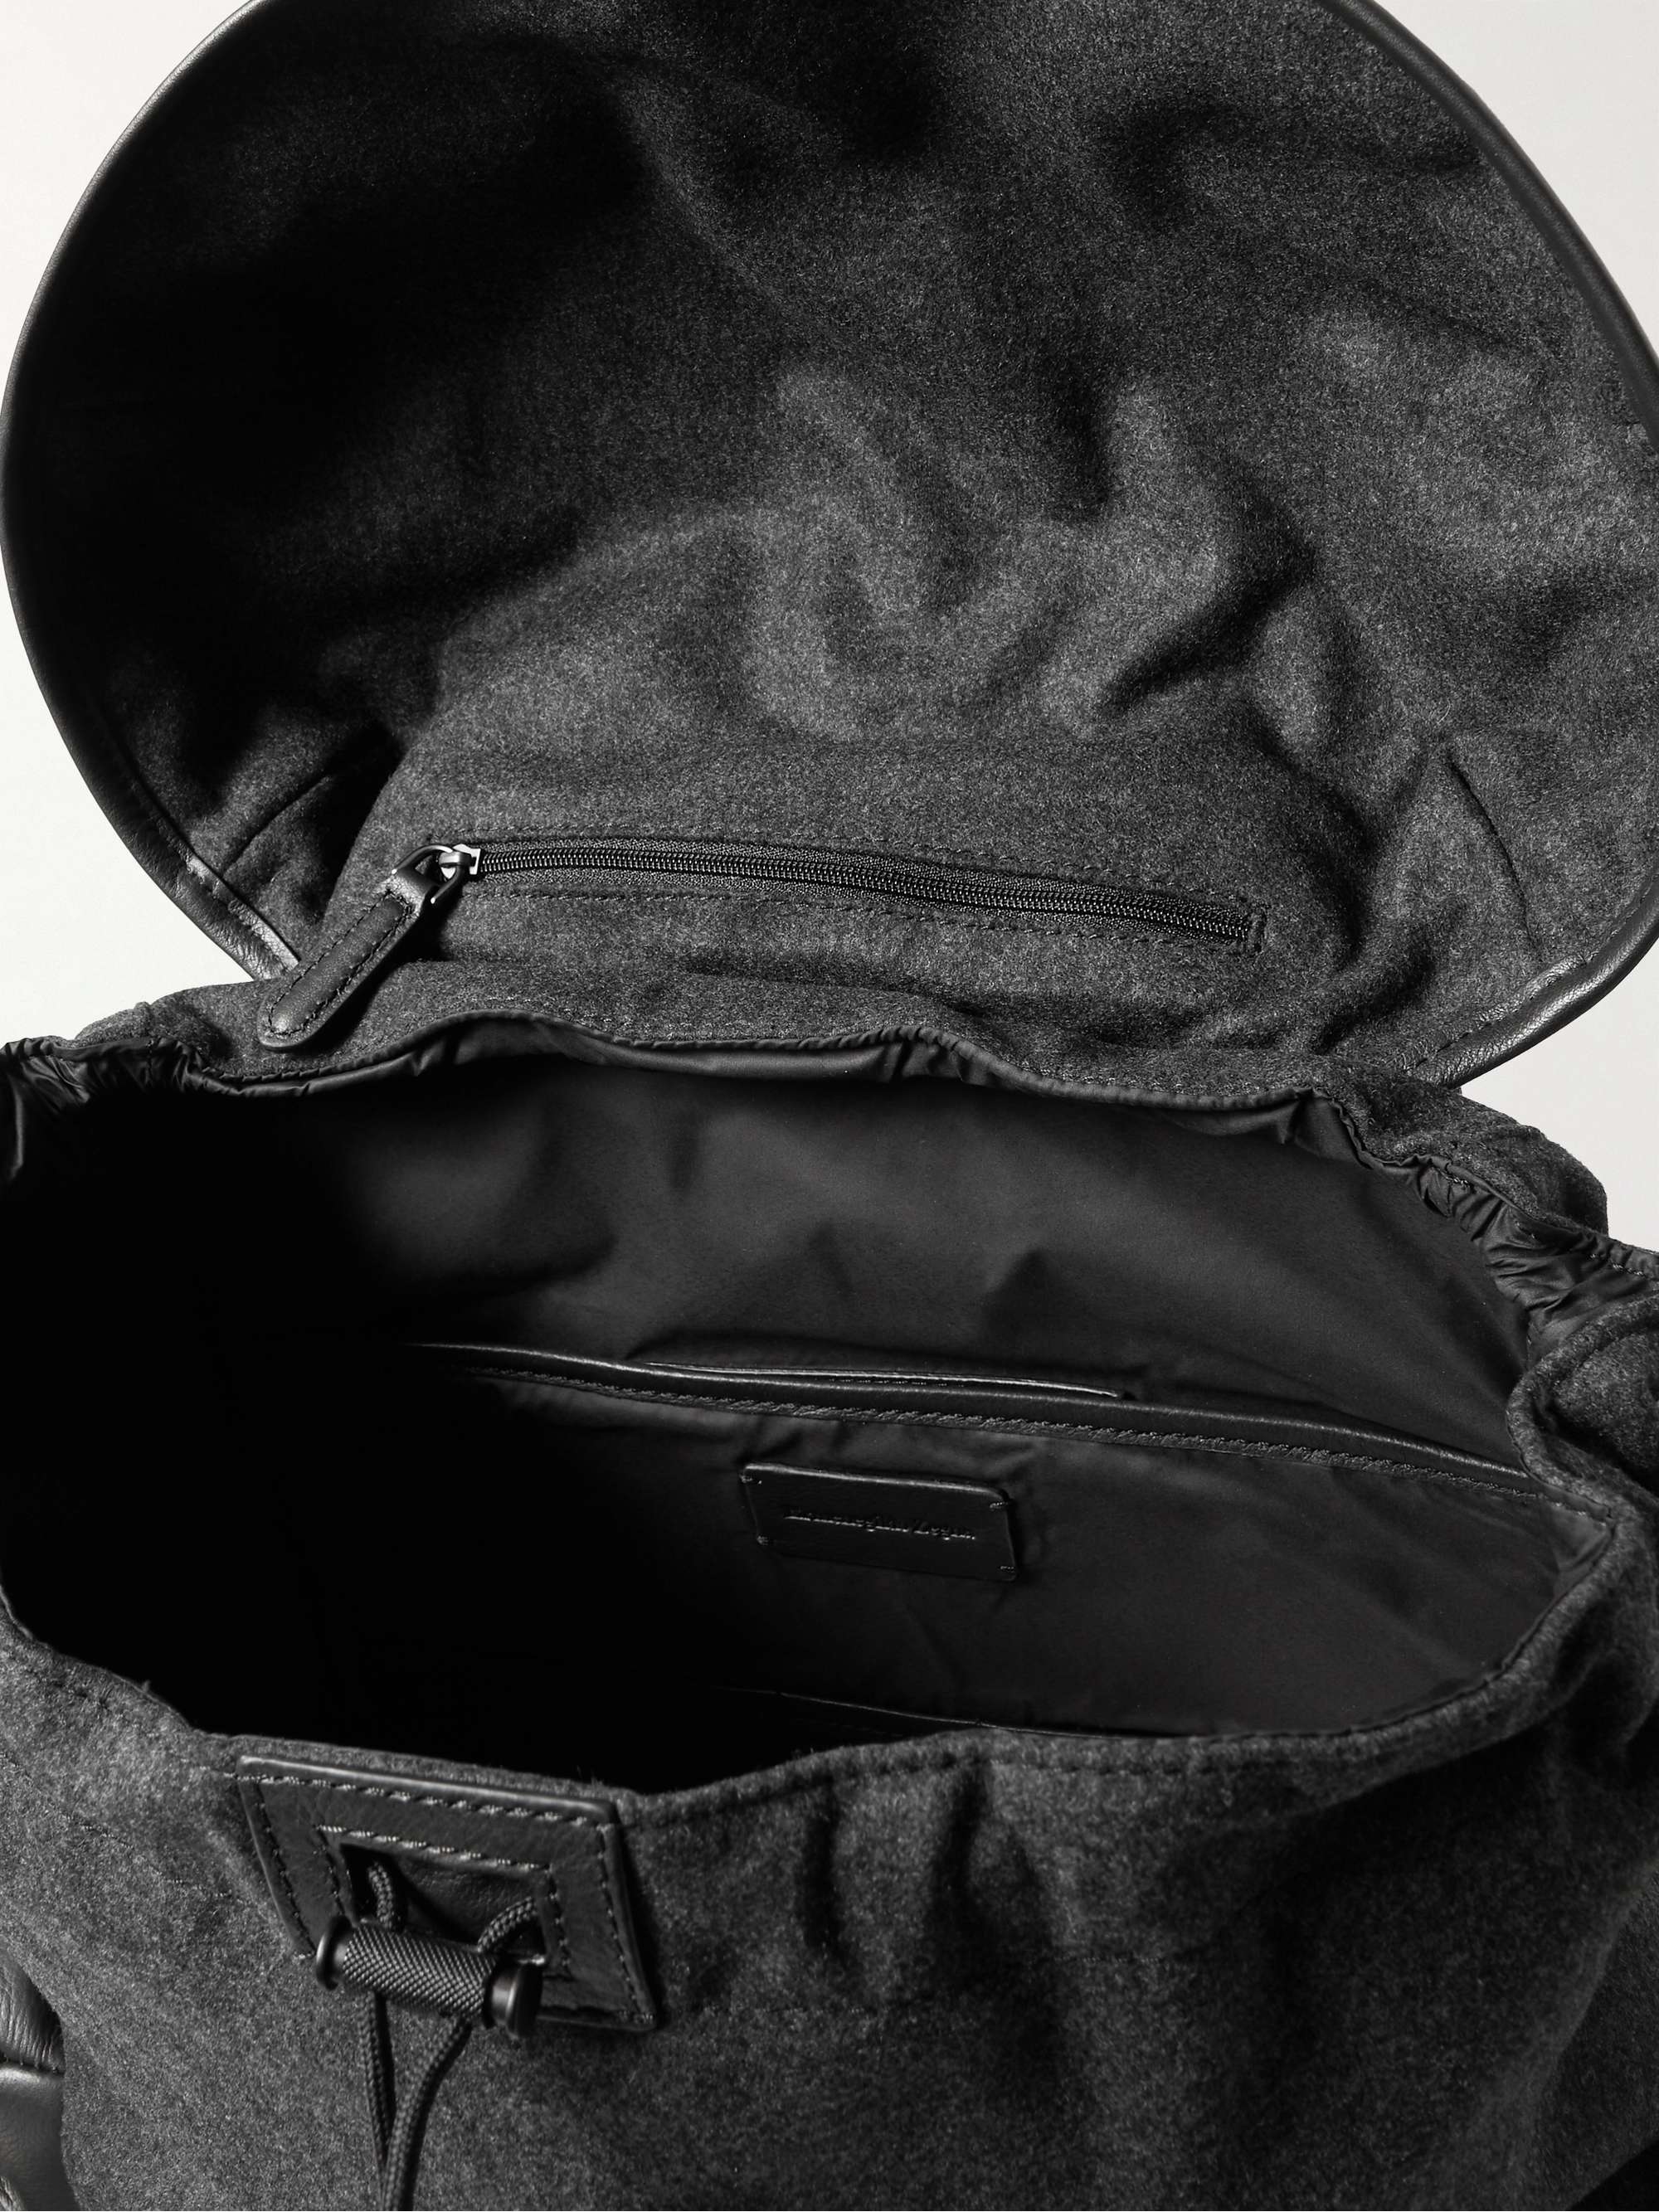 ERMENEGILDO ZEGNA Leather-Trimmed Wool Backpack